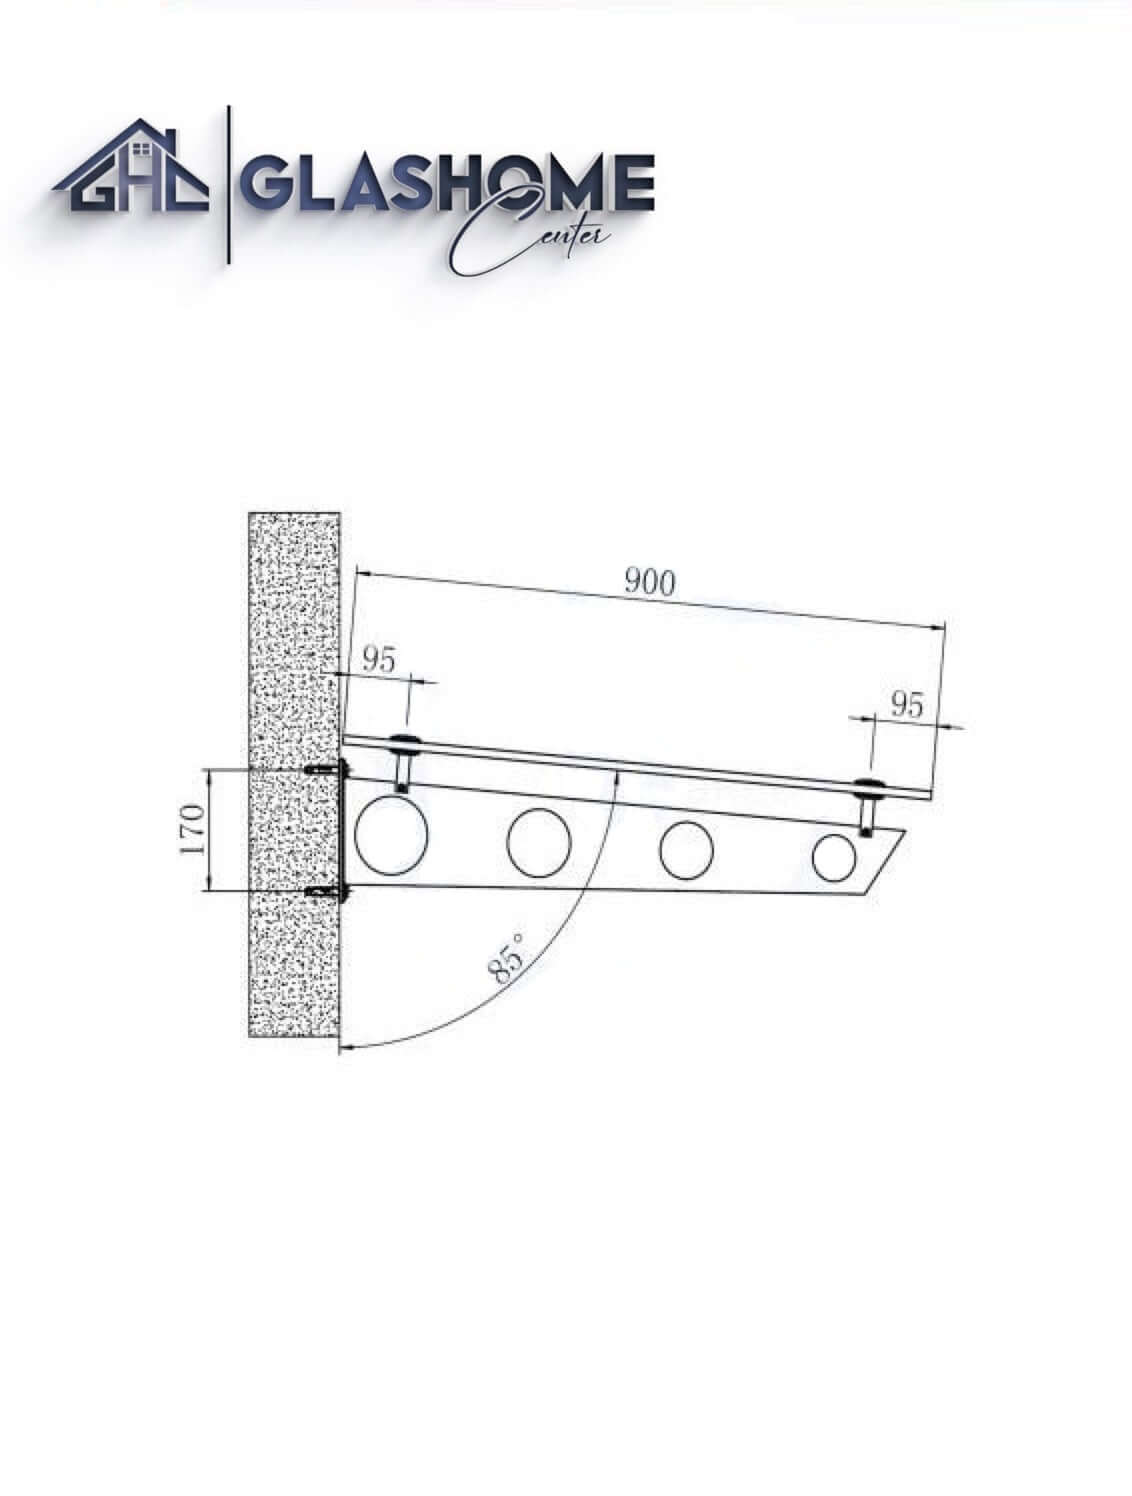 GlasHomeCenter - glass canopy - Clear glass - 130x90cm - 13.1mm VSG - incl. 2 Edelstahlhalterungen Variant "Stockholm"